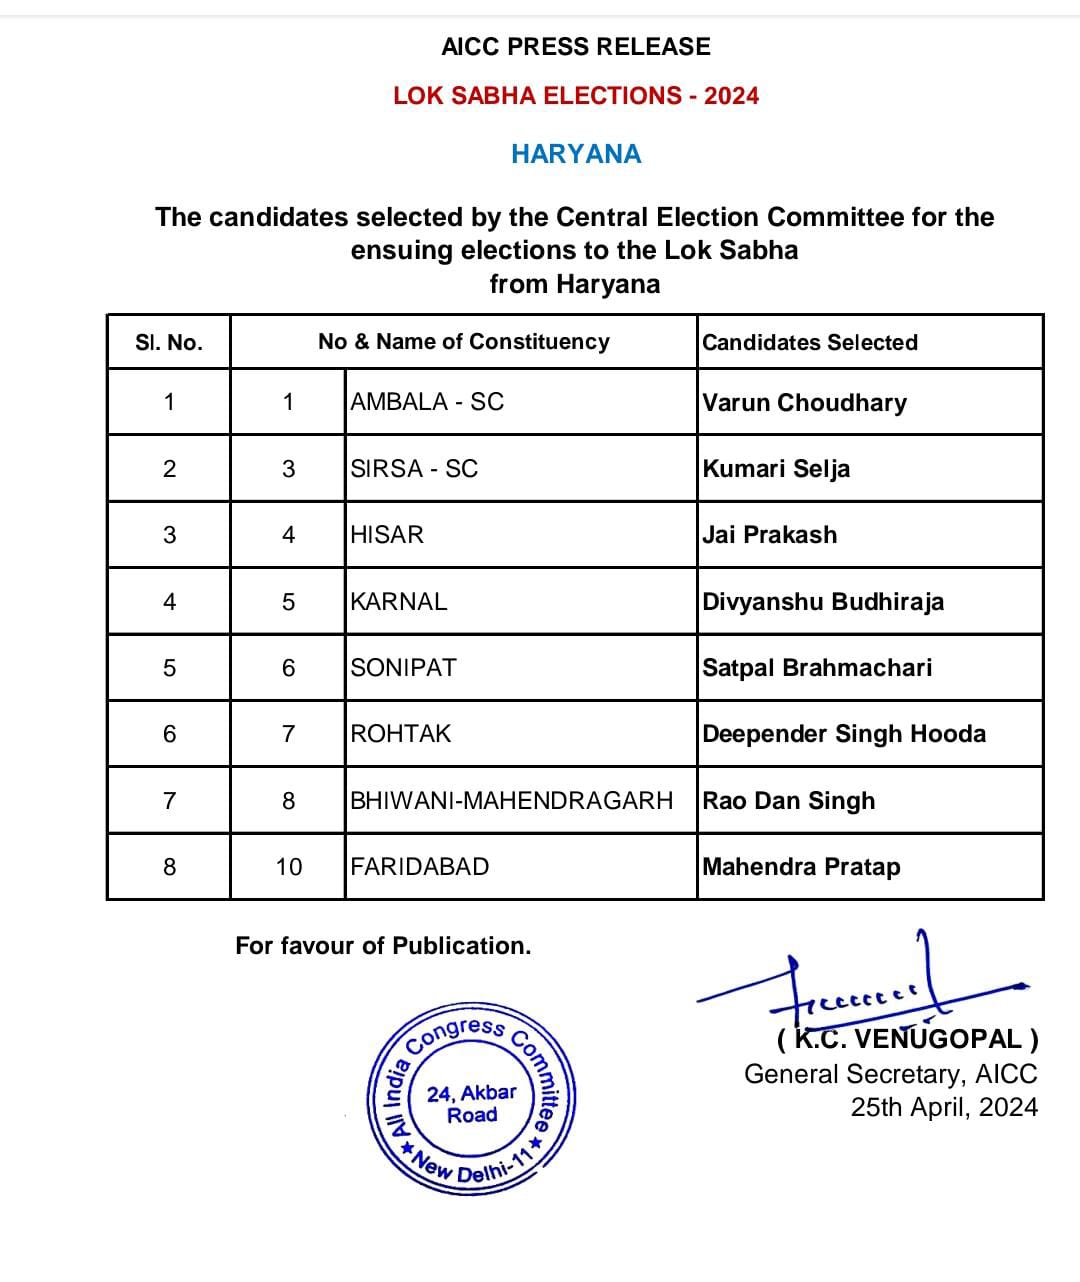 Haryana Congress Candidates List